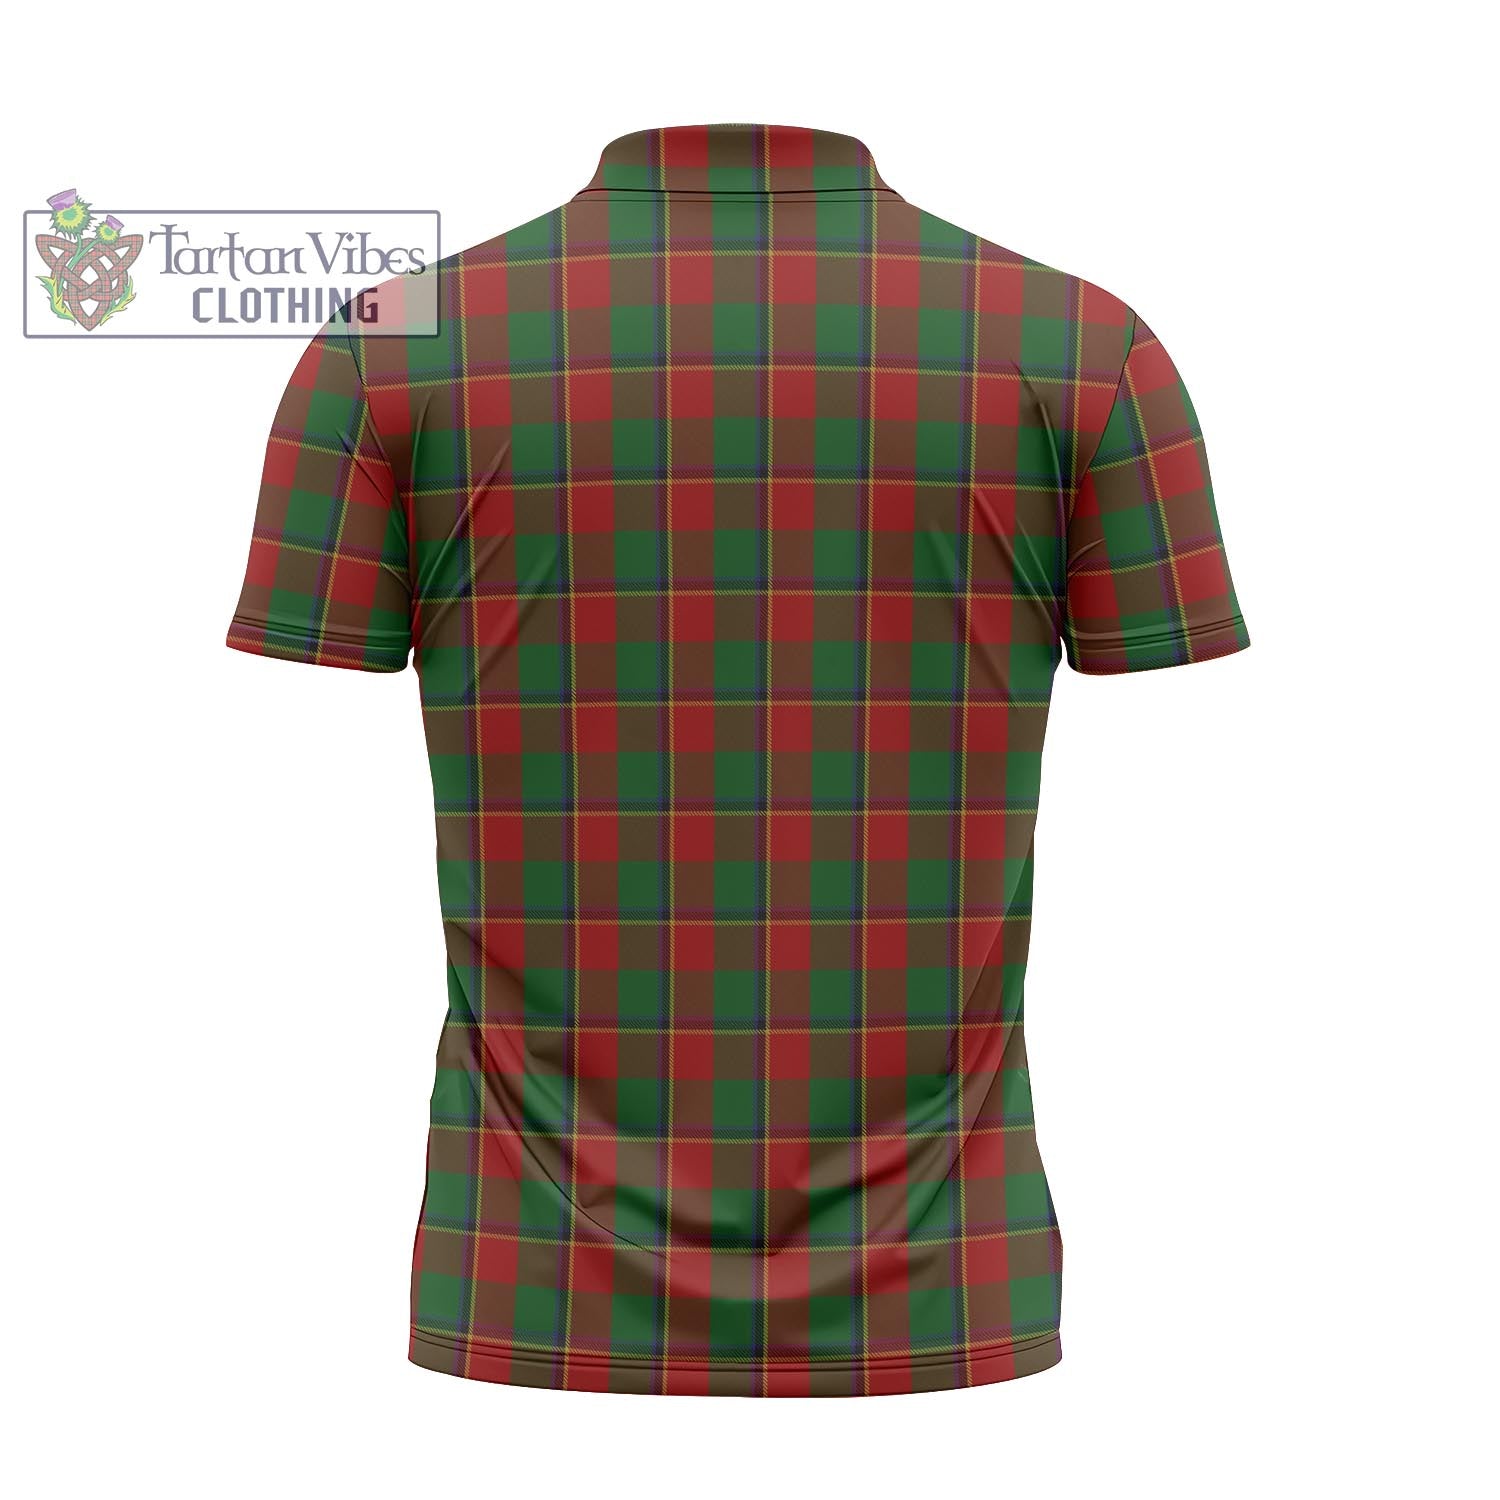 Tartan Vibes Clothing Turnbull Dress Tartan Zipper Polo Shirt with Family Crest